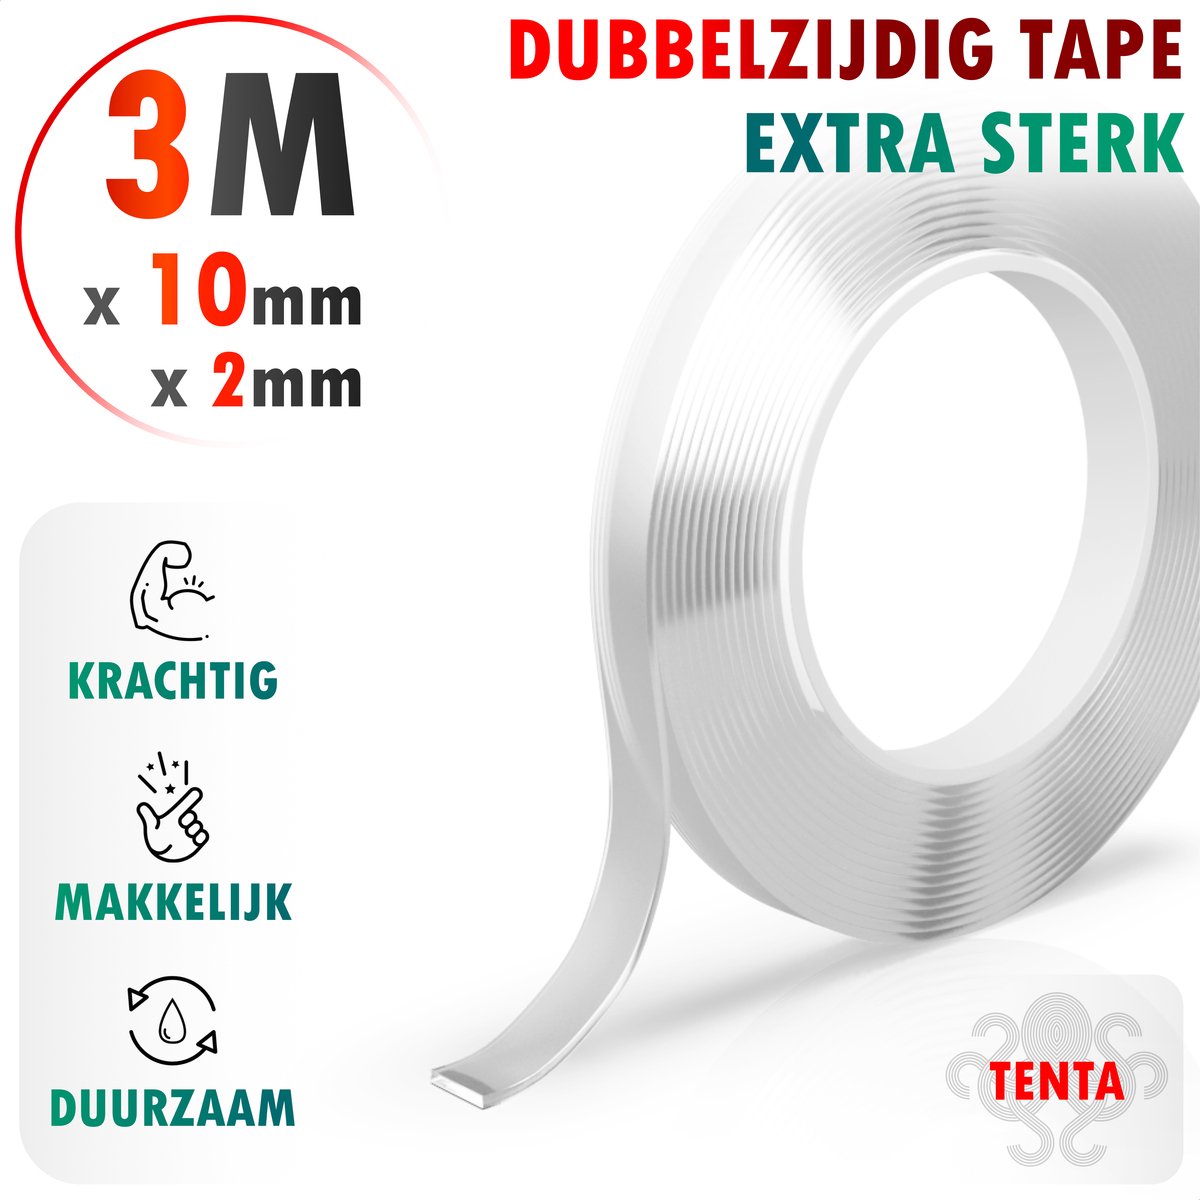 TENTA® Dubbelzijdig Tape Extra Sterk - 3m x 10mm x 2mm - TENTA®